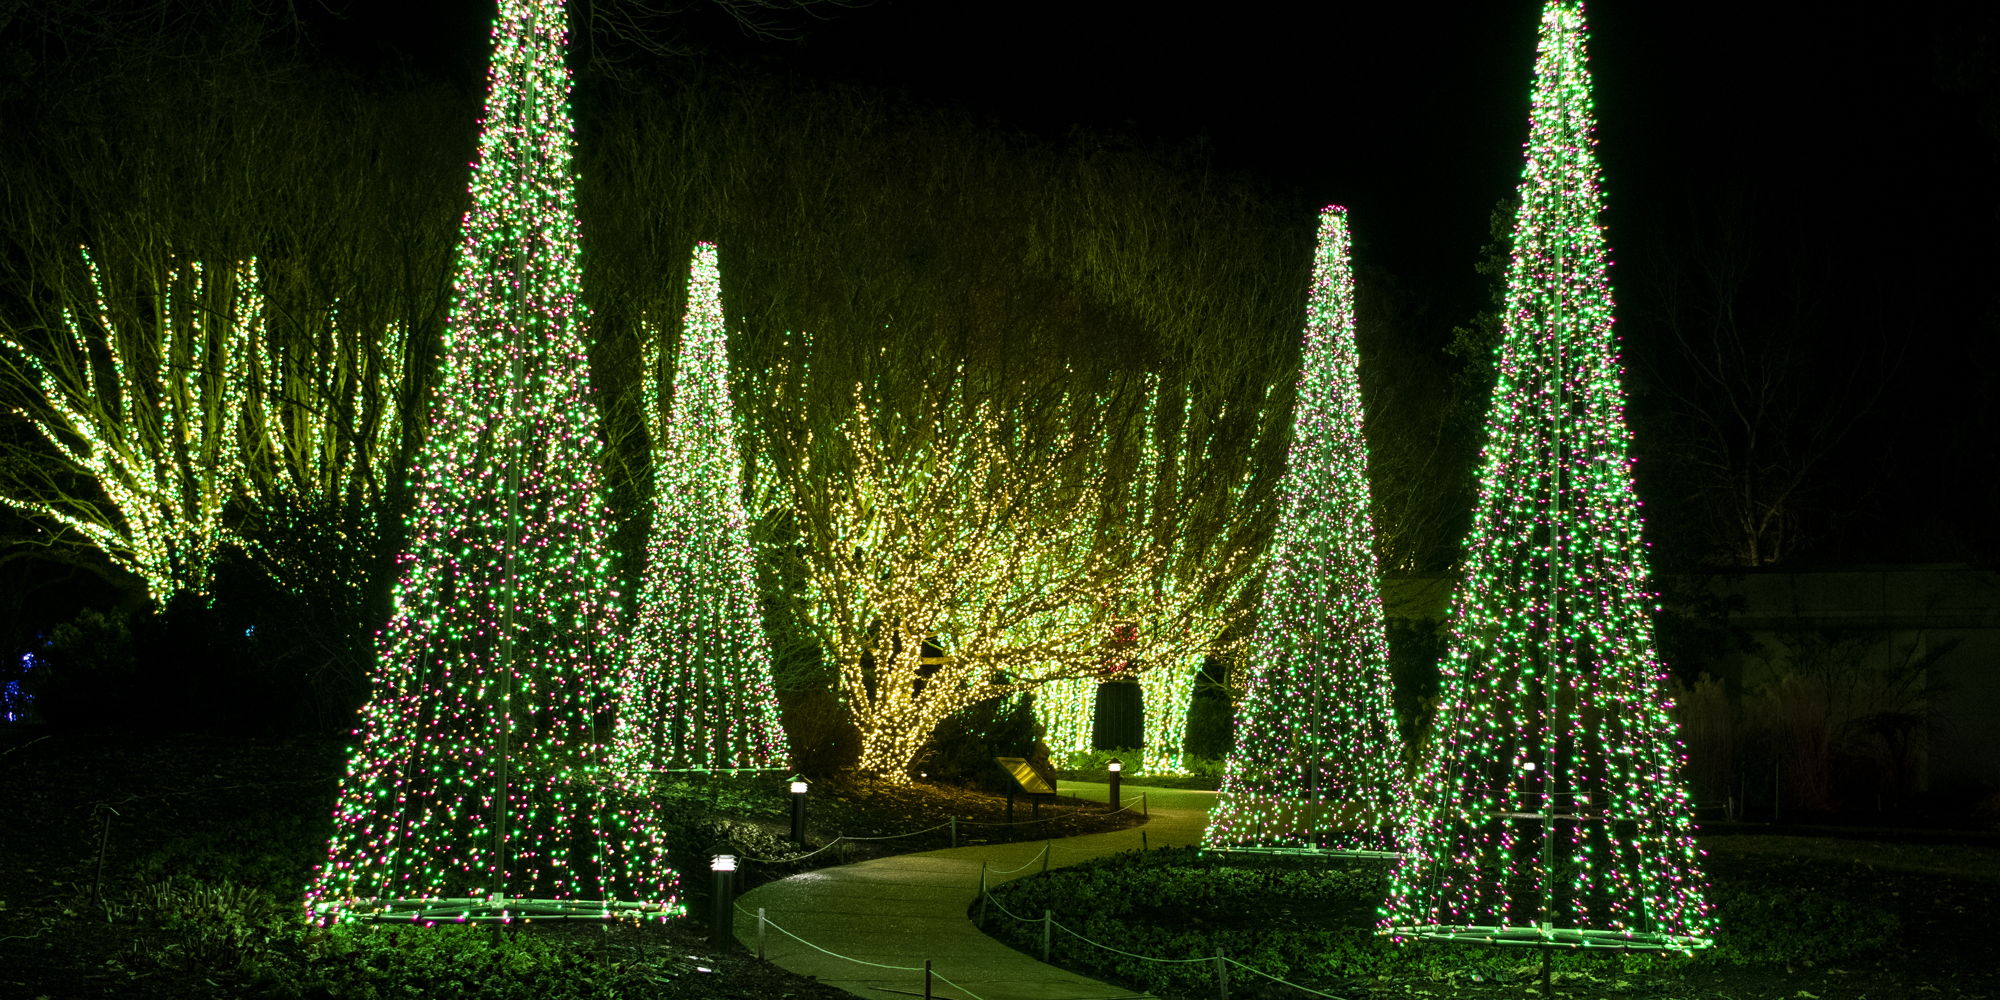 Holiday LIGHTS promotional image